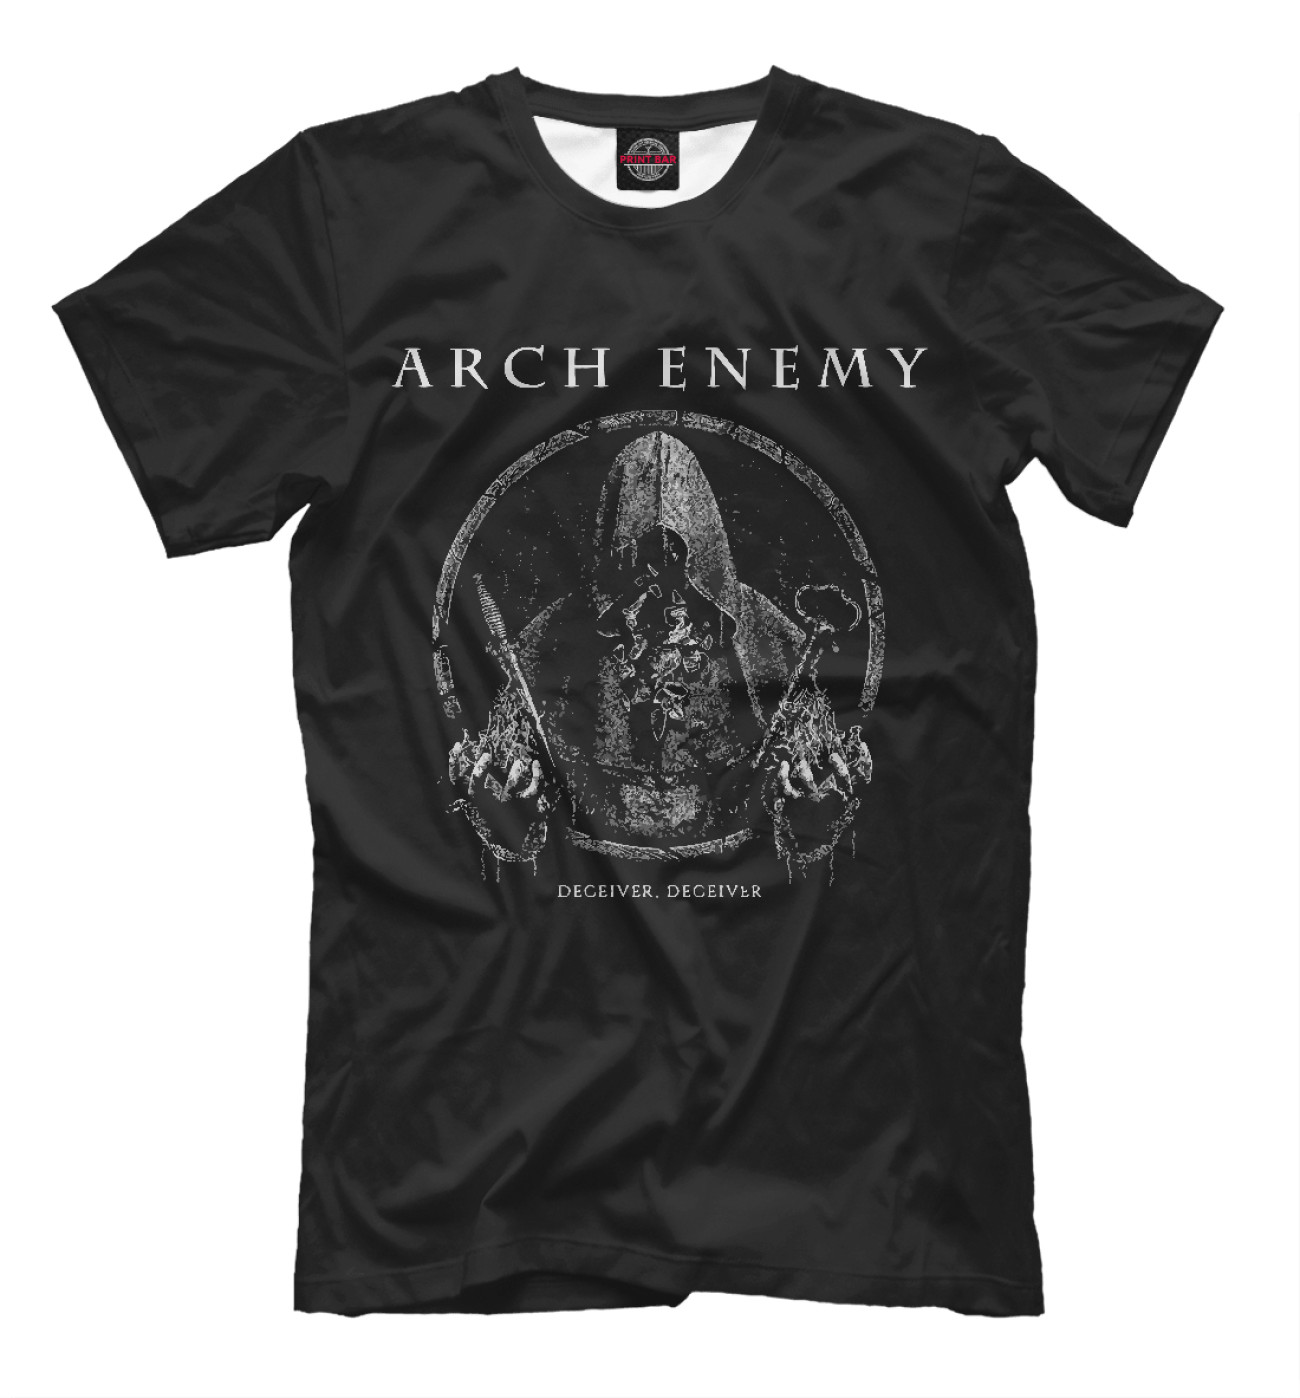 Мужская Футболка Arch Enemy, артикул: AEN-333026-fut-2